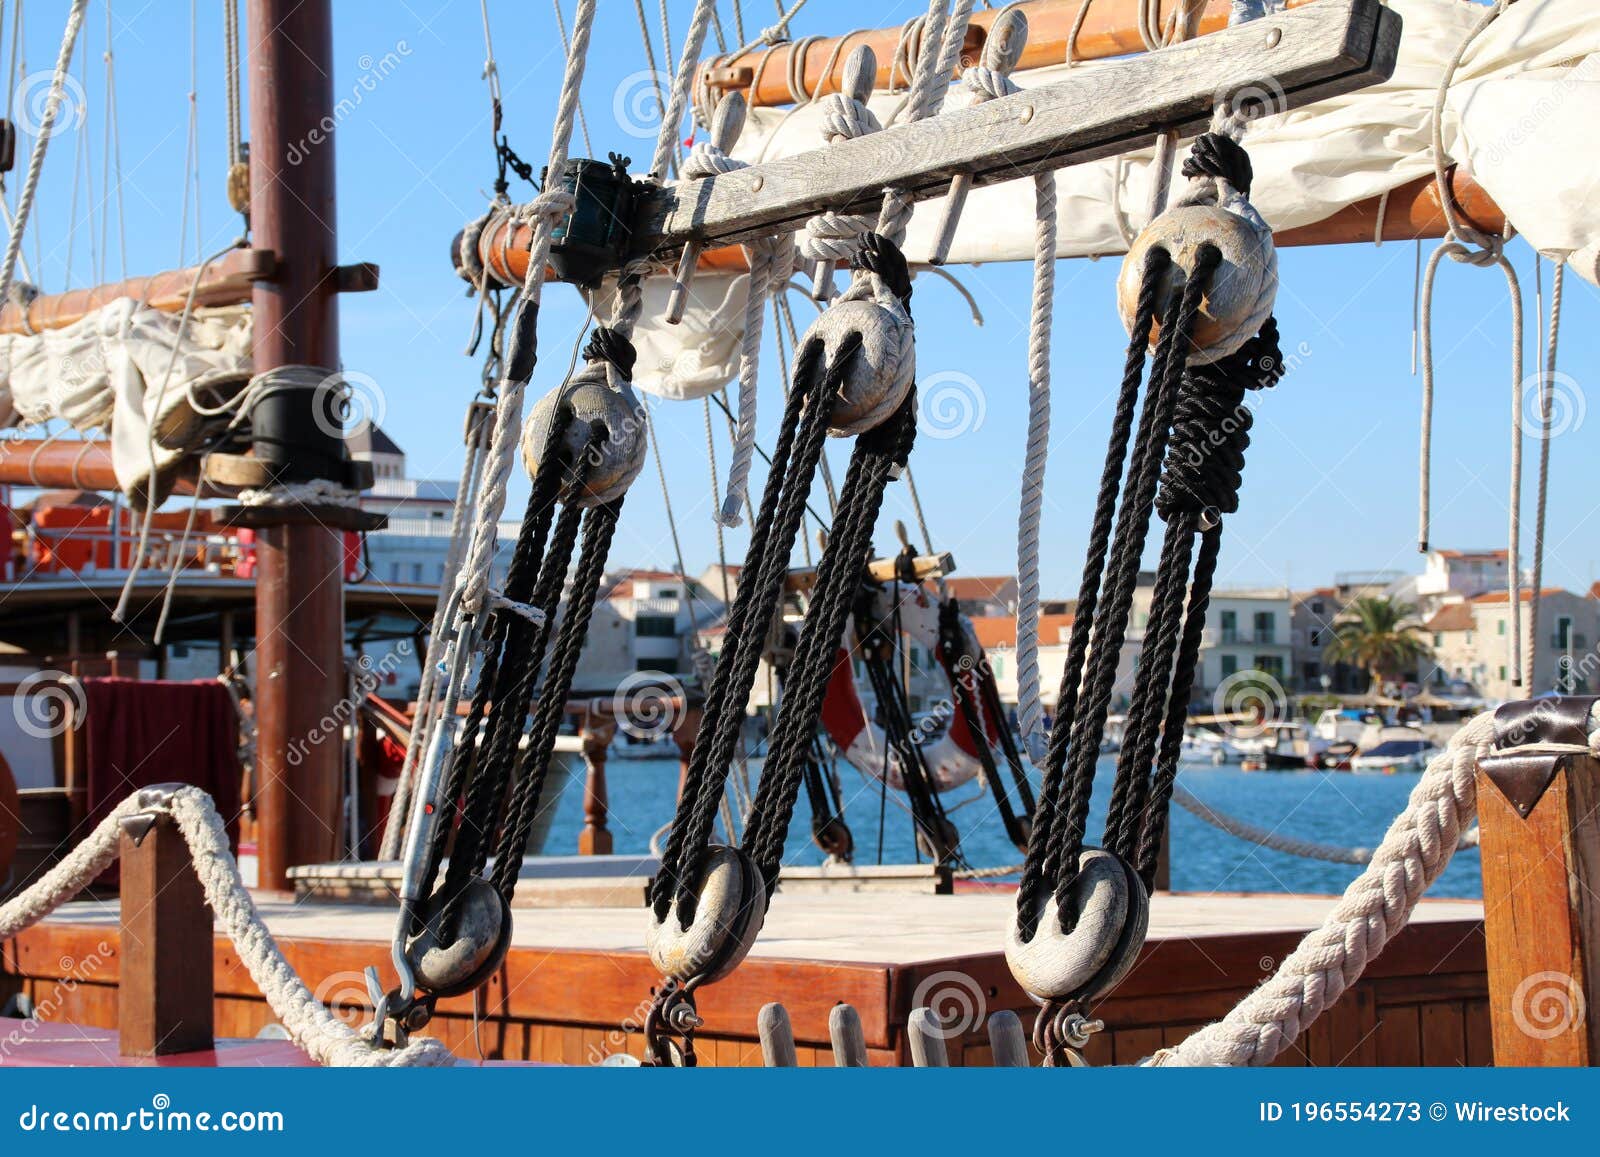 Closeup Shot of Ship Rigging Ropes Stock Image - Image of rope, trade:  196554273